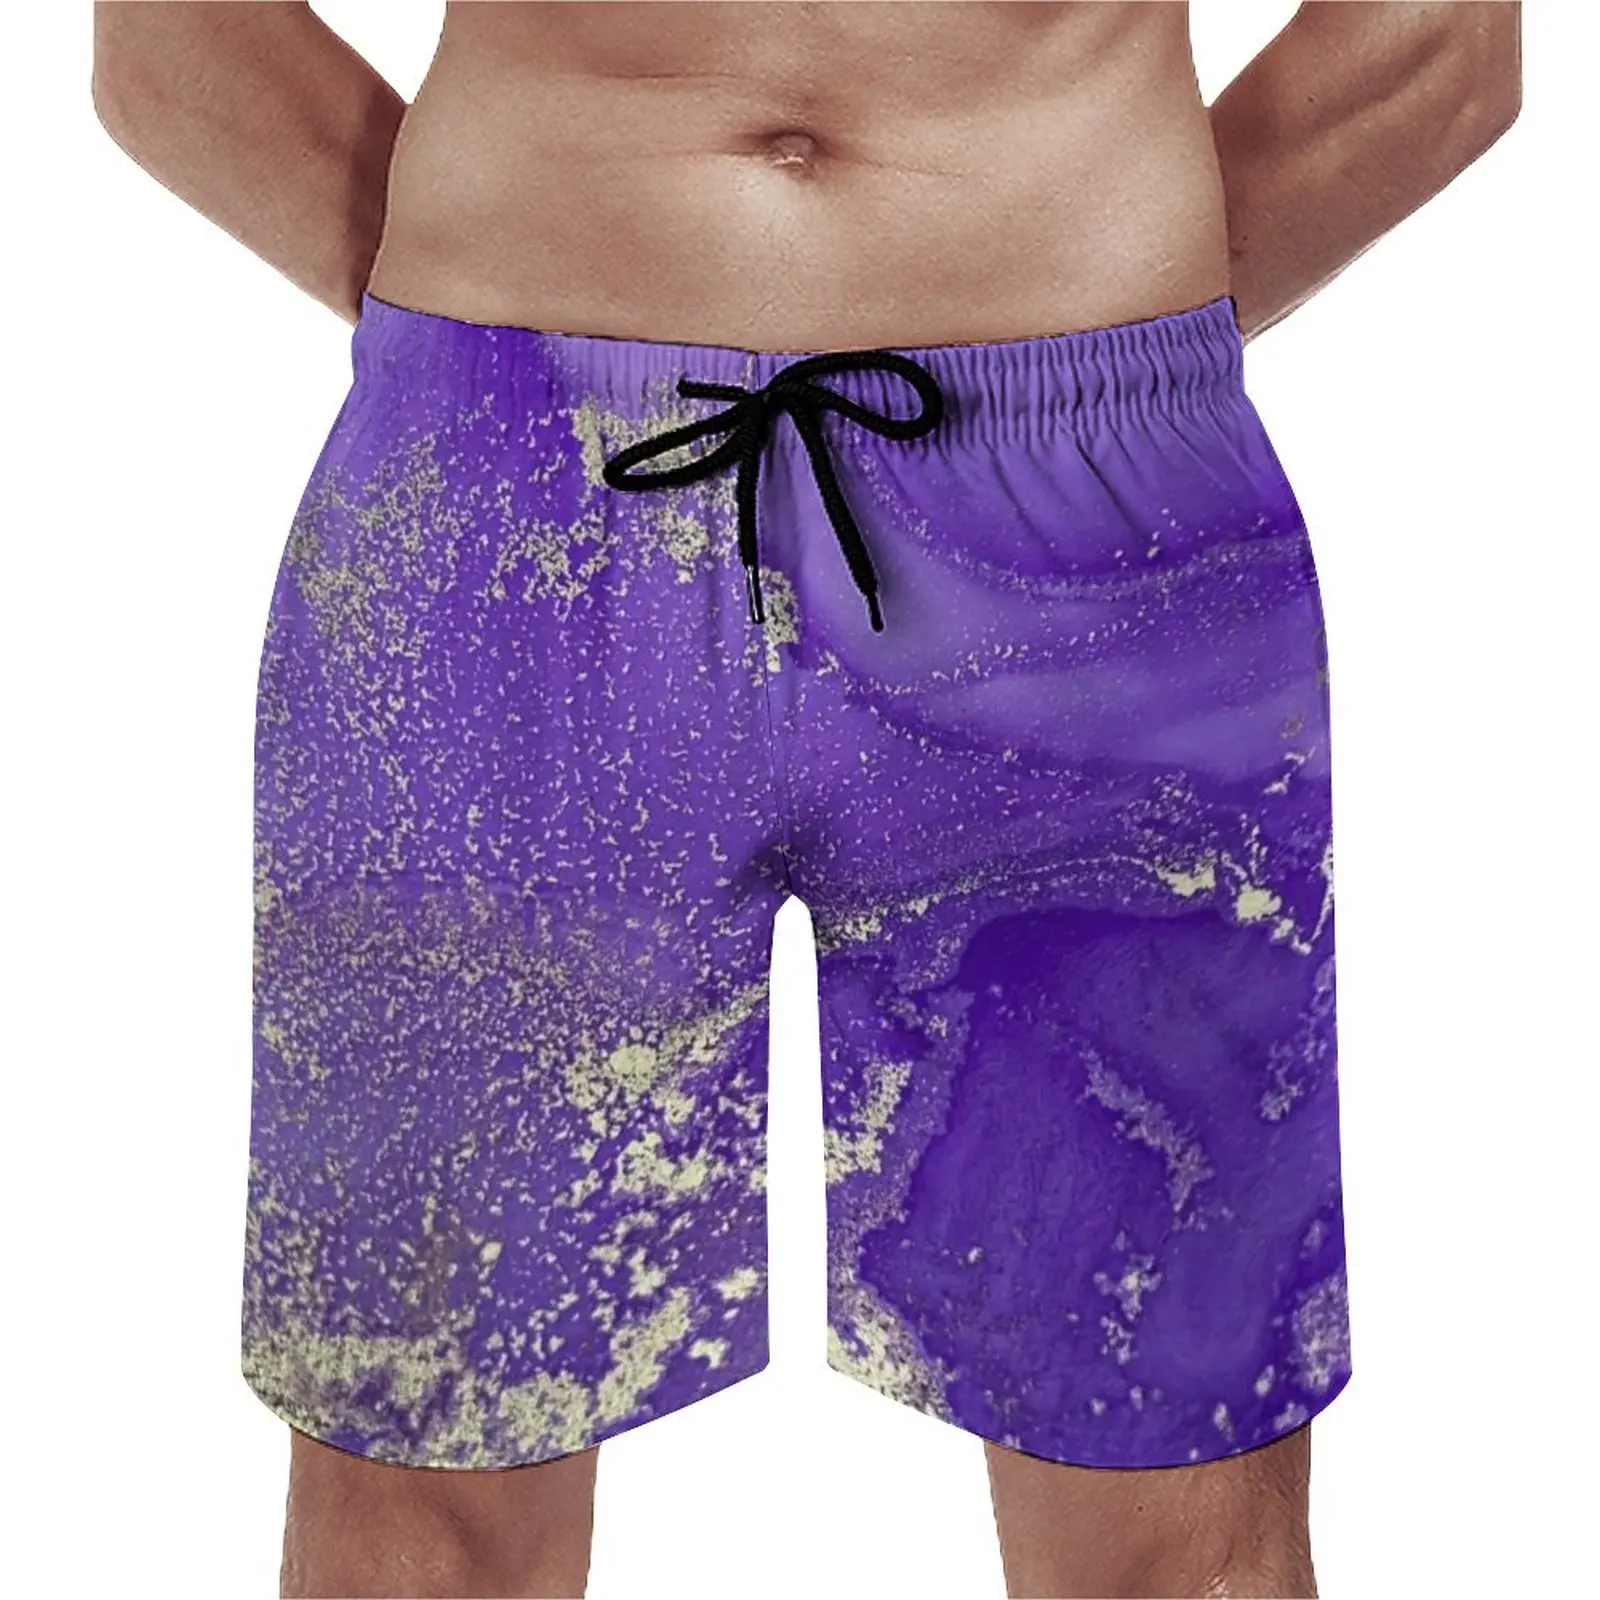 

Purple And Organic Marble Board Shorts Abstract Ink Art Fashion Beach Shorts Men Design Sportswear Quick Dry Swim Trunks Gift